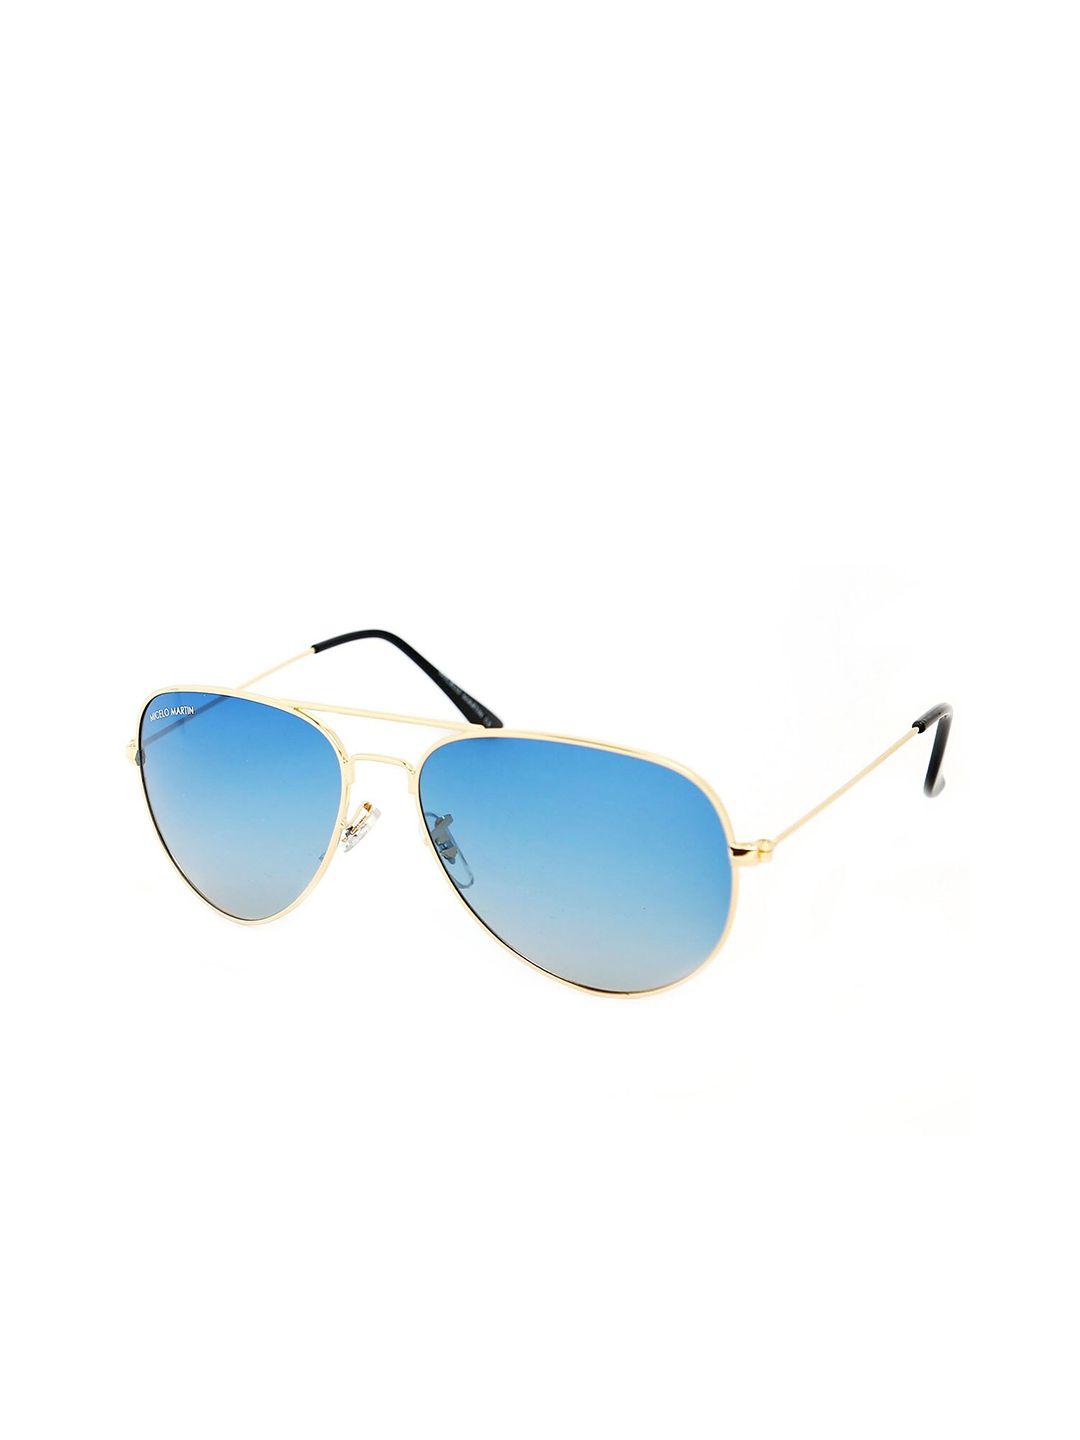 micelo martin unisex blue lens & gold-toned aviator sunglasses with uv protected lens